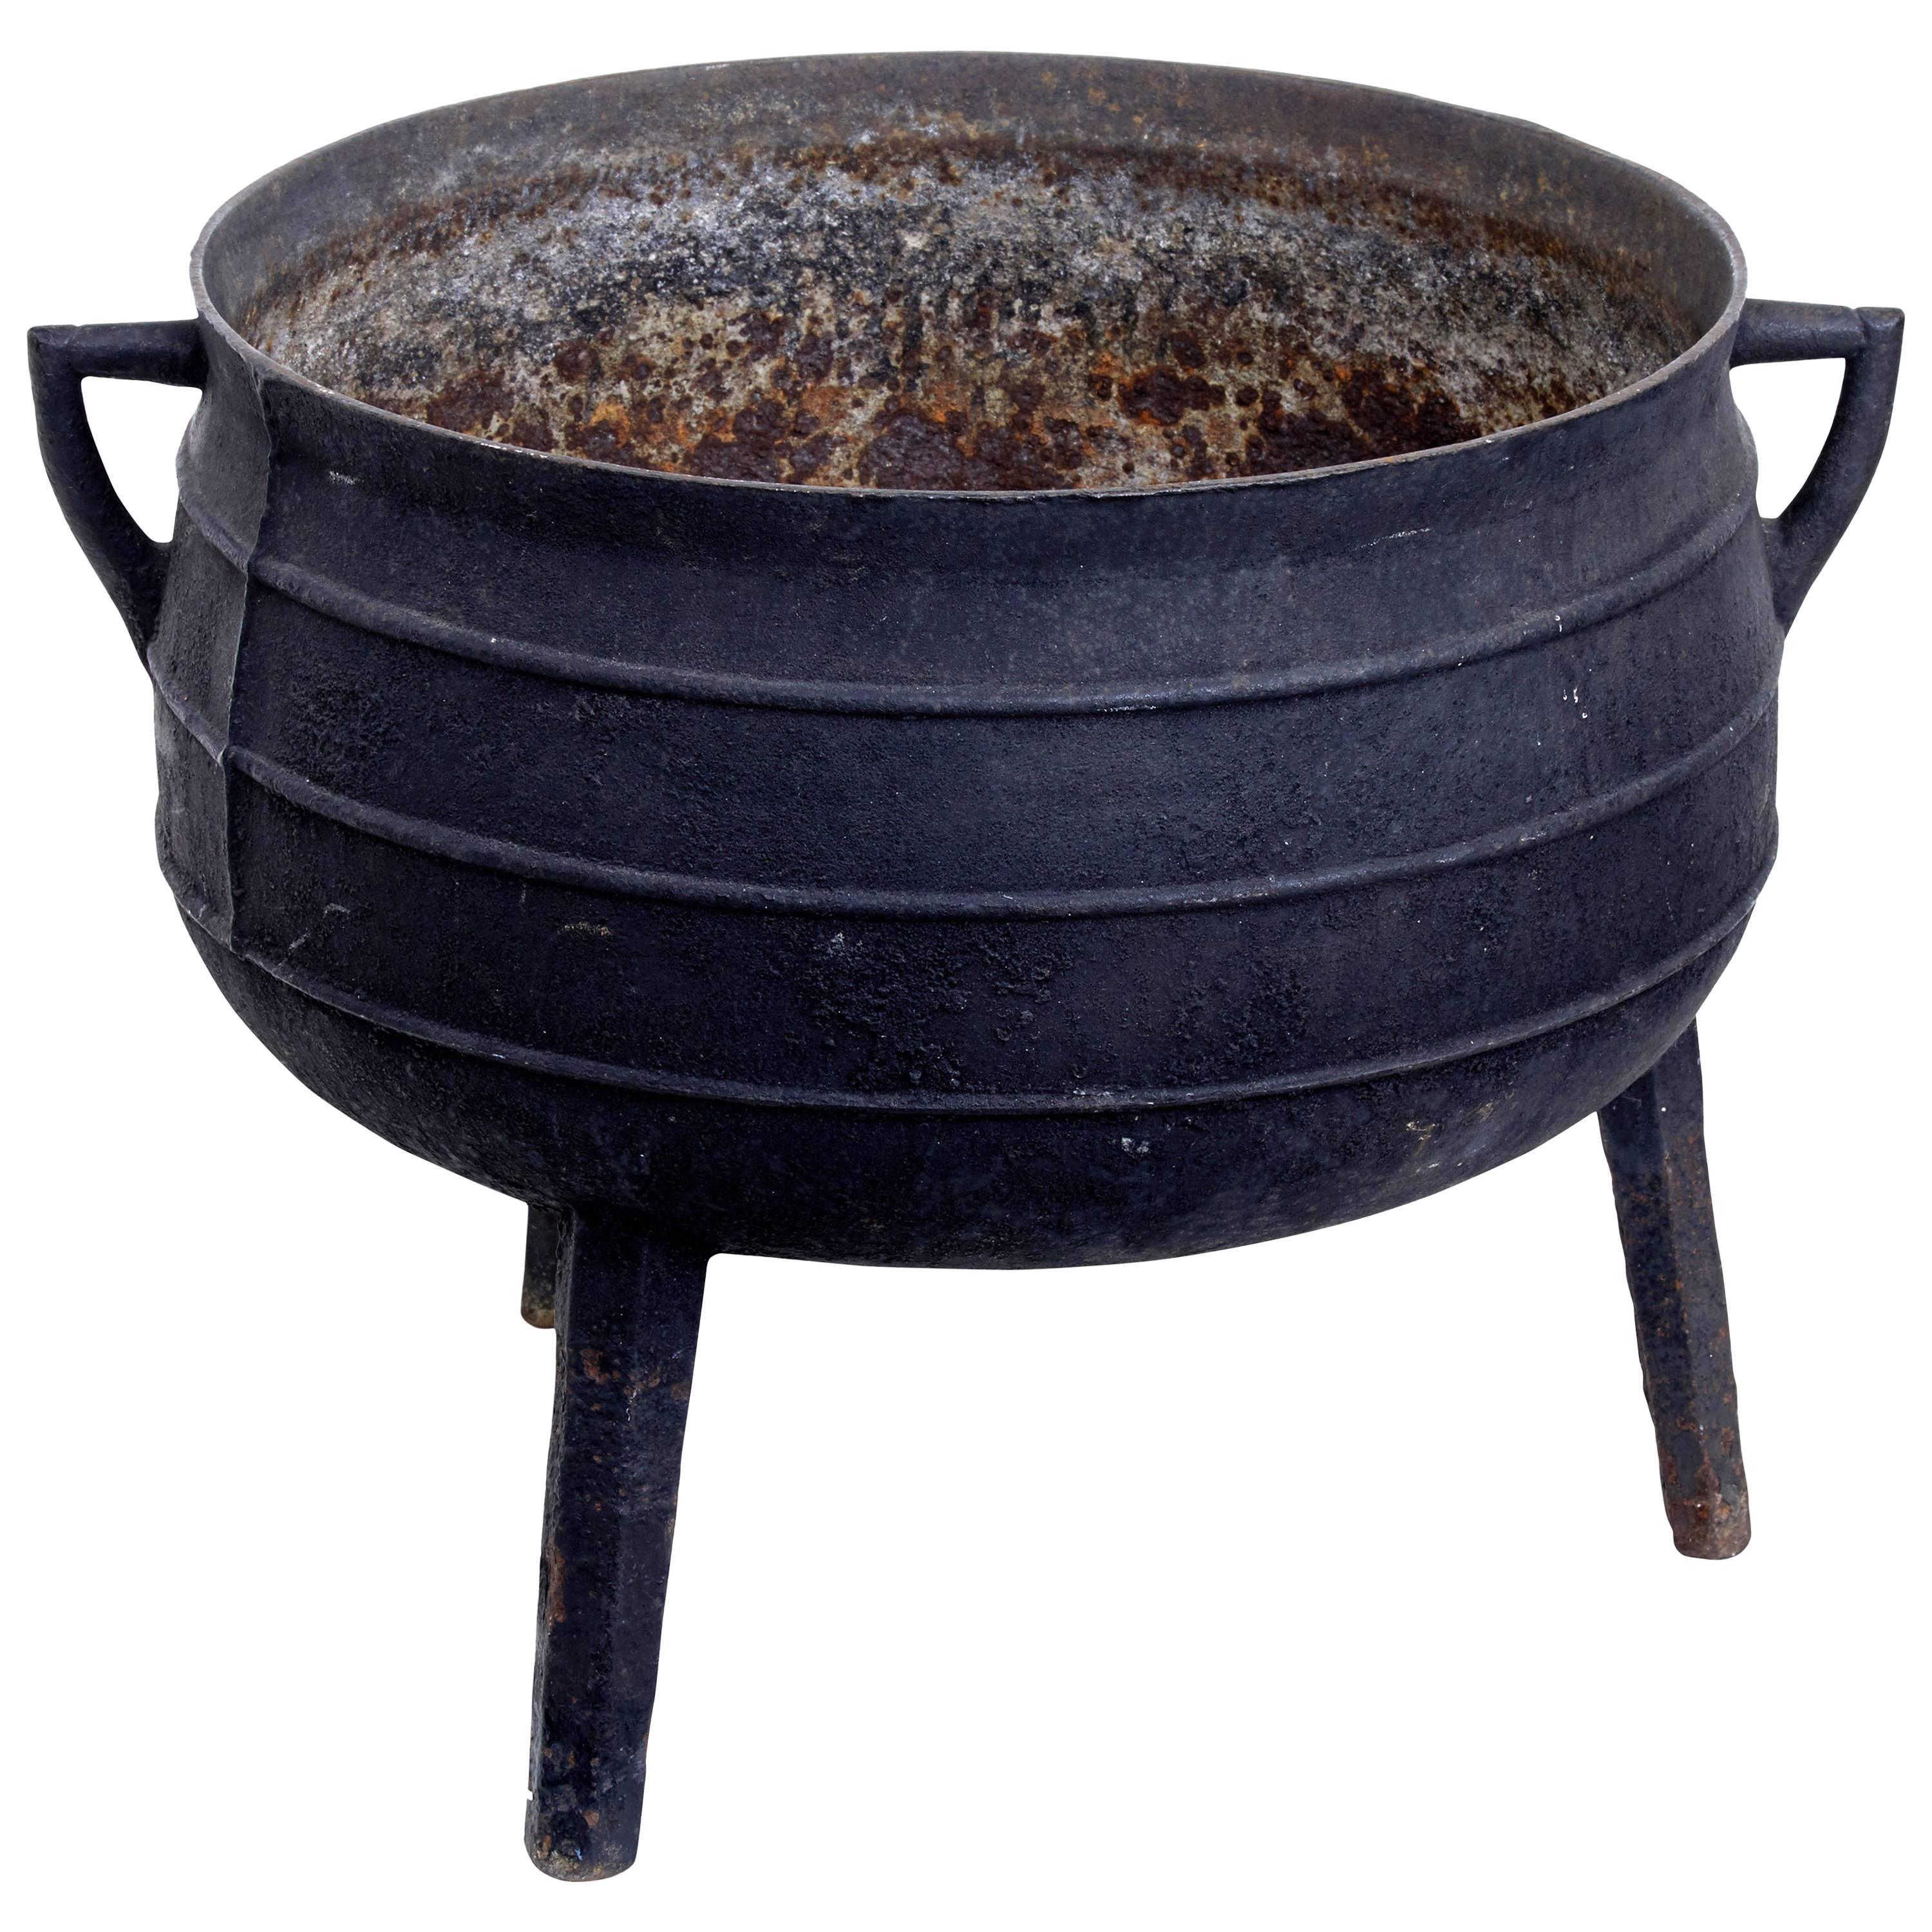 19th Century Cast Iron Vessel Pot